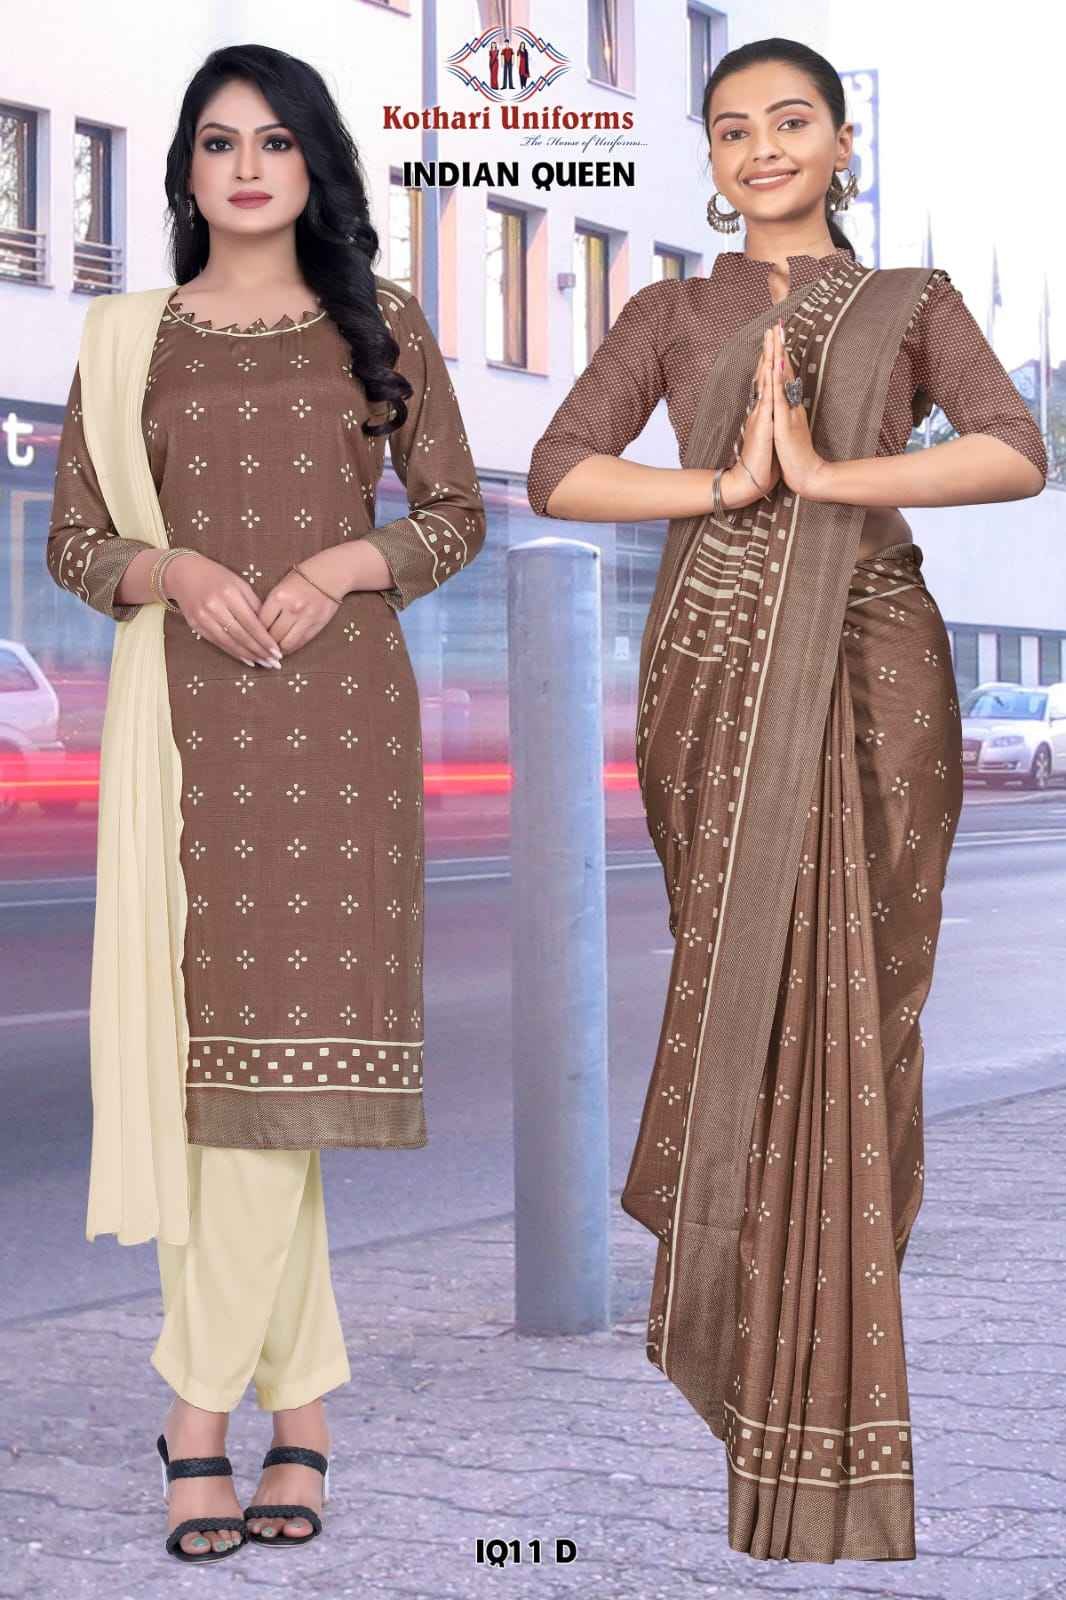 Brown and Beige Indian Queen - IQ11 D & CIQ11 D  Women's Premium Non Crepe  Printed Traditional Teacher Uniform Saree Salwar Combo